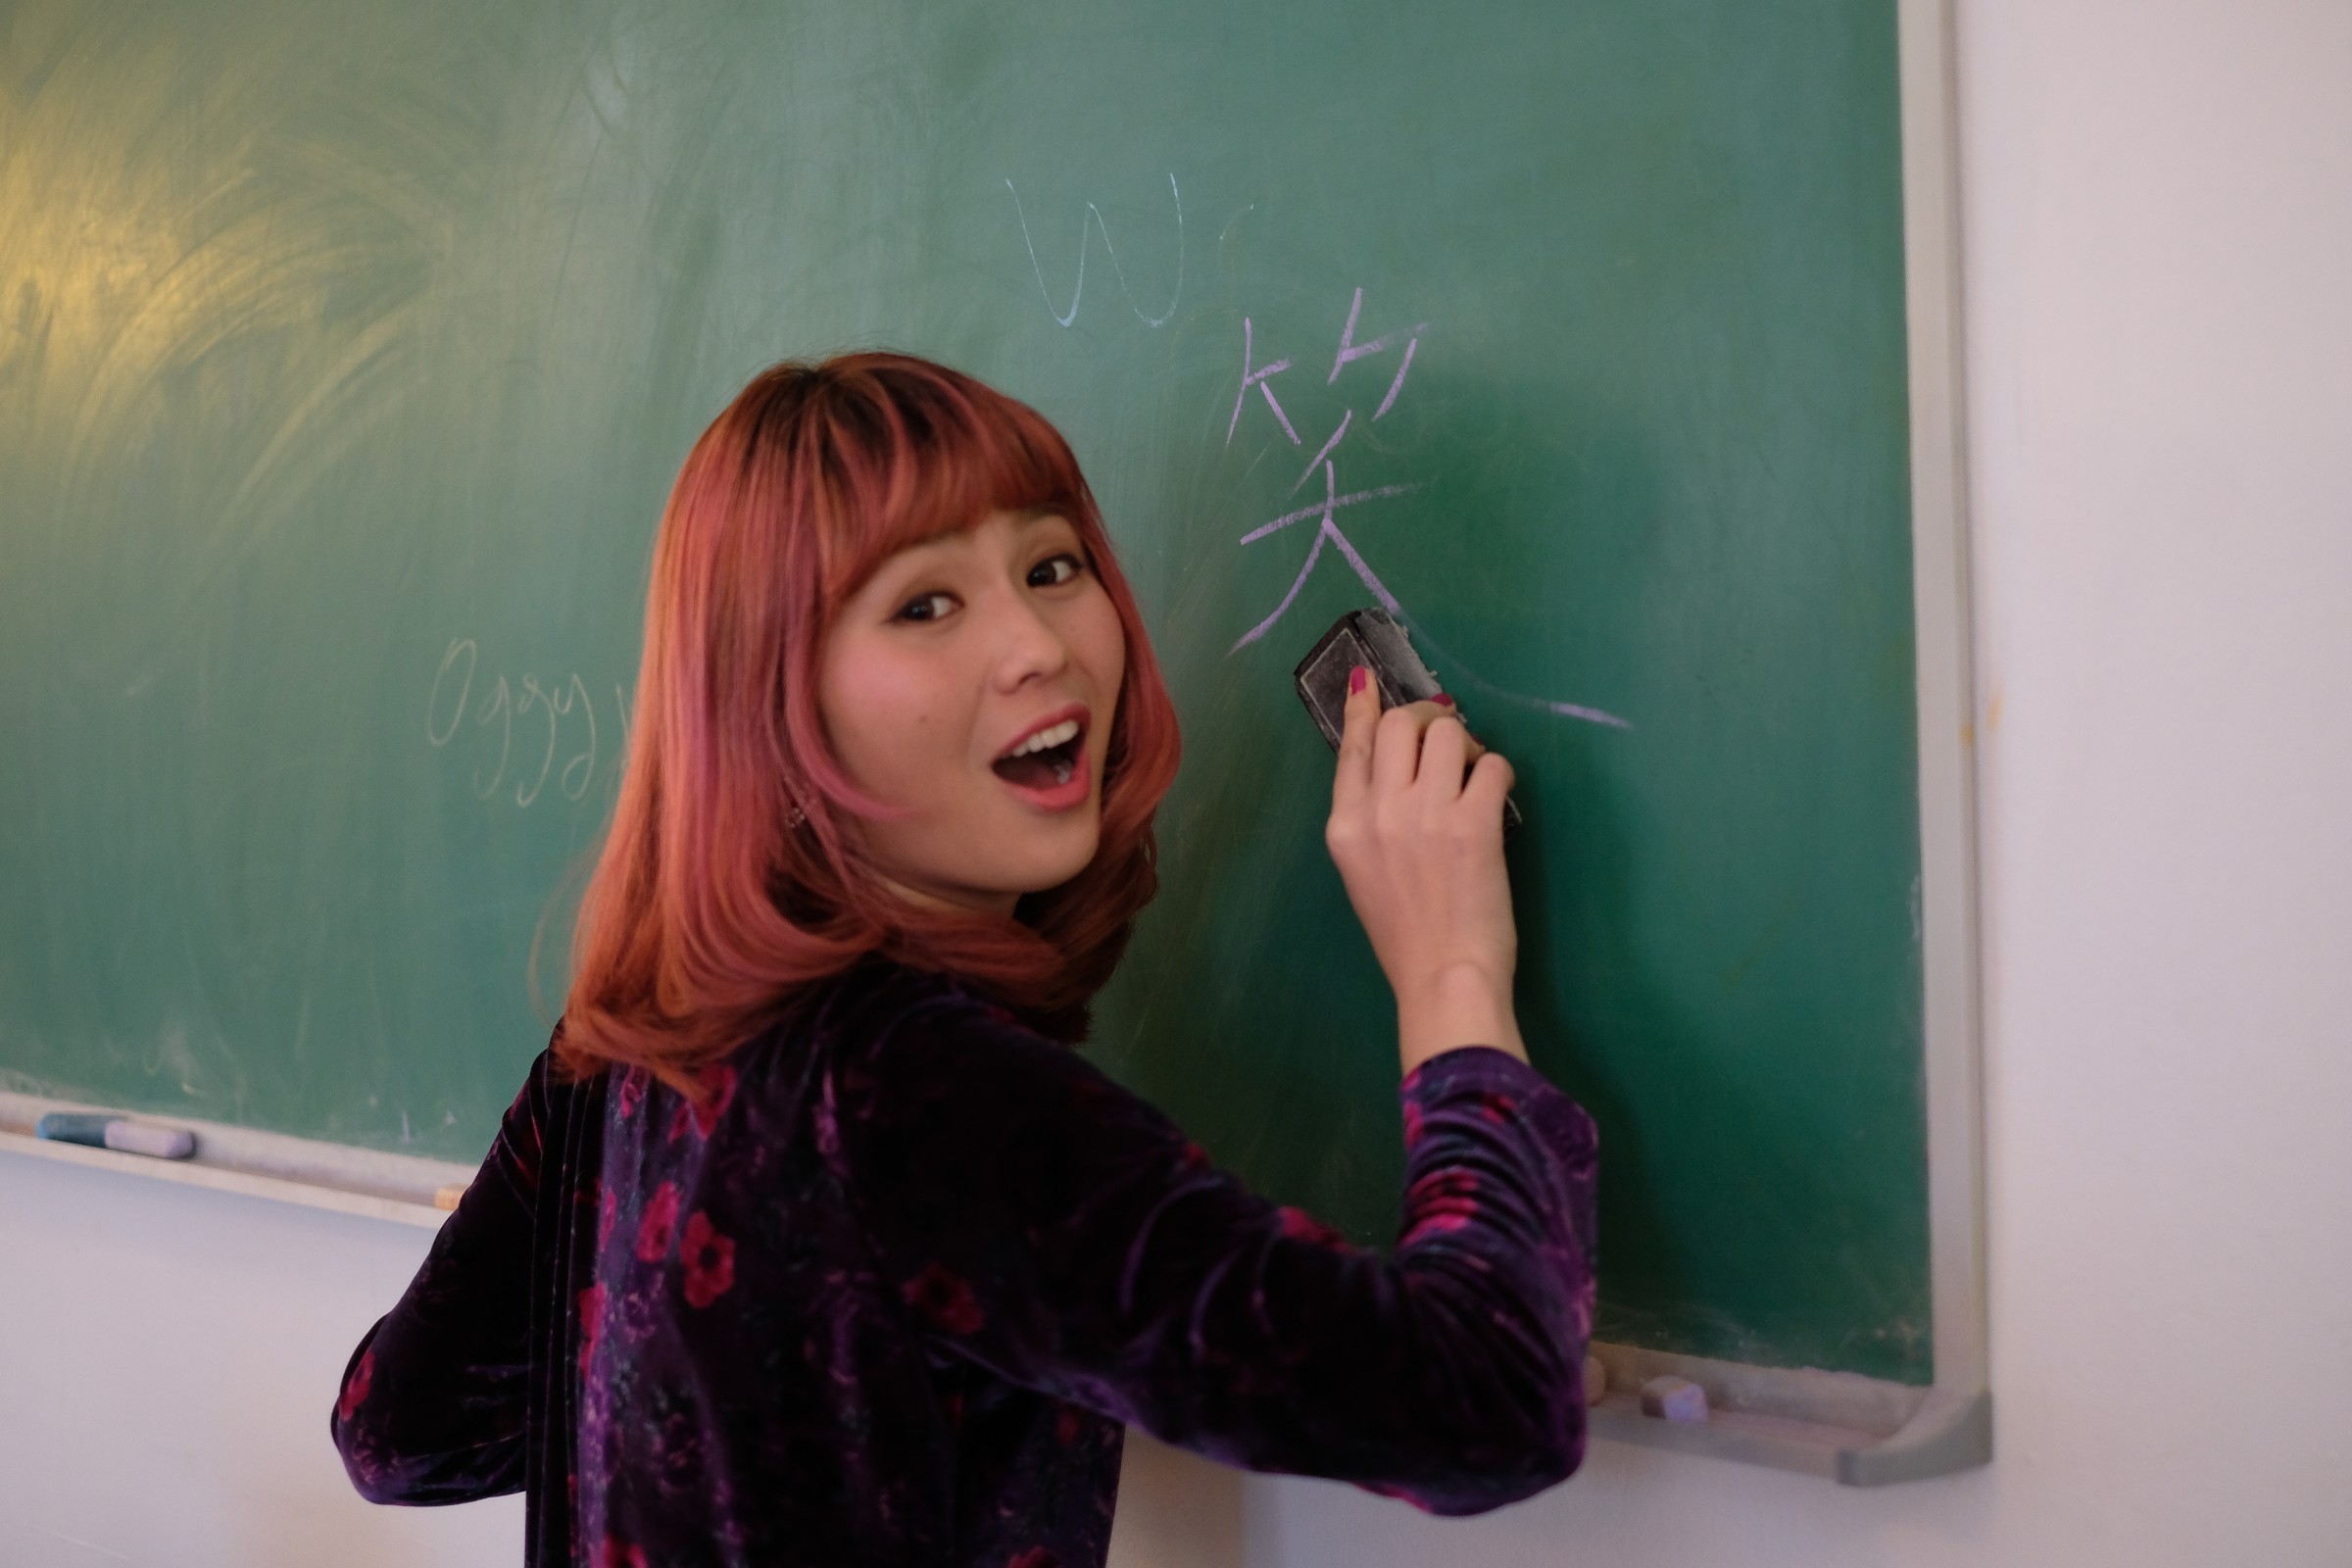 Asian girl writing on chalkboard